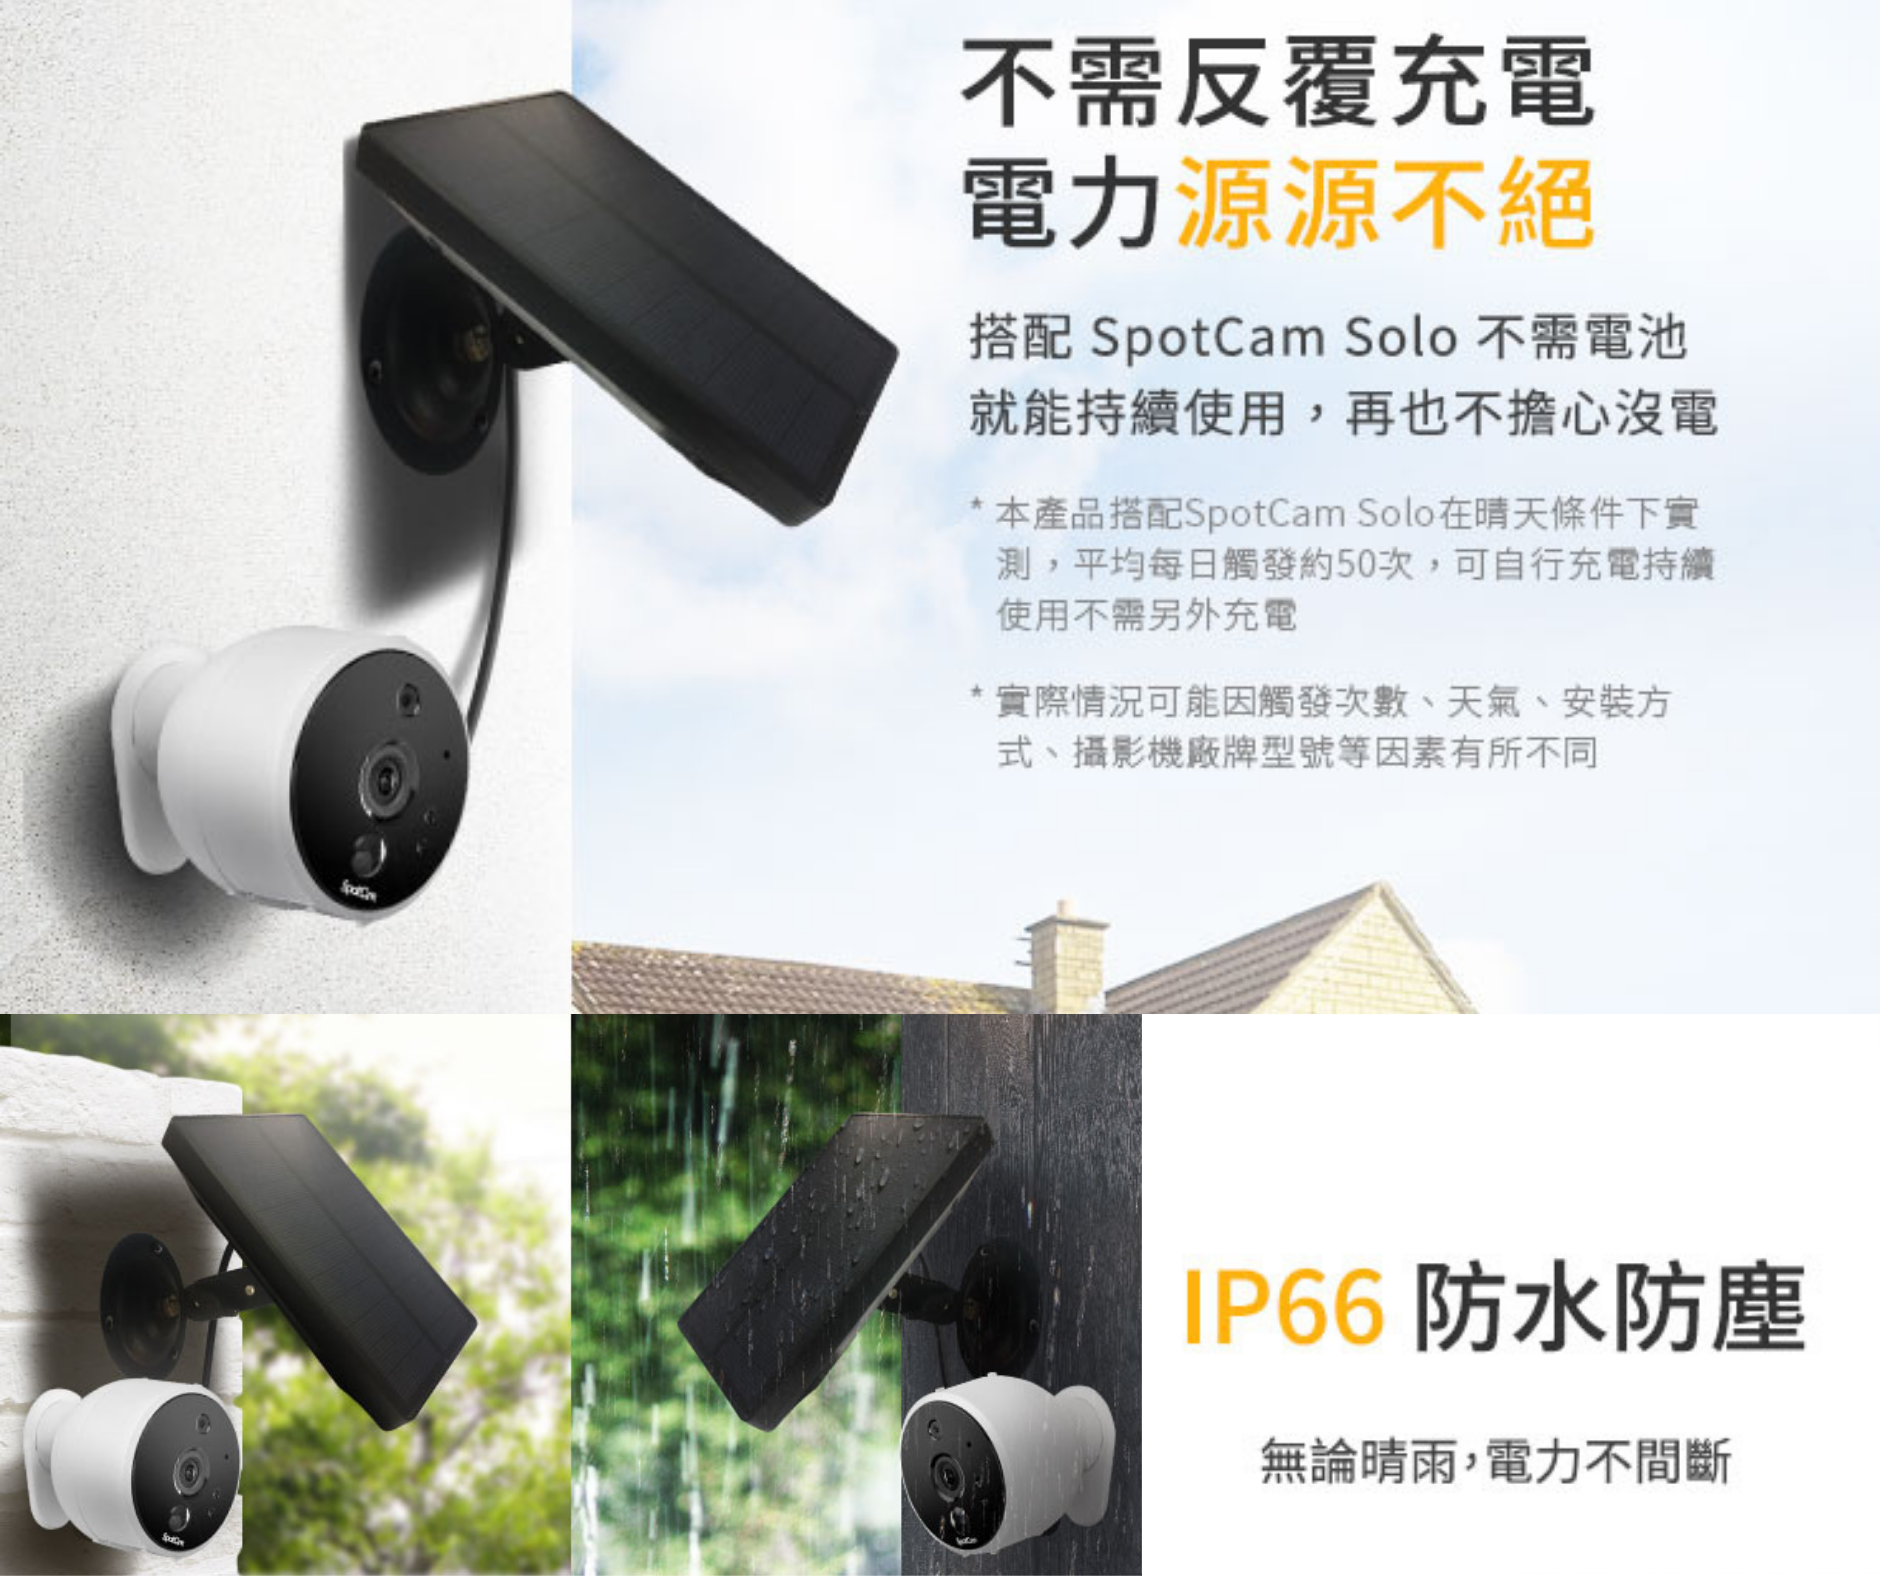 SpotCam Solo 2無線網絡攝錄機|SpotCam Solo 2|充電板】 會員特價Aiyo0o